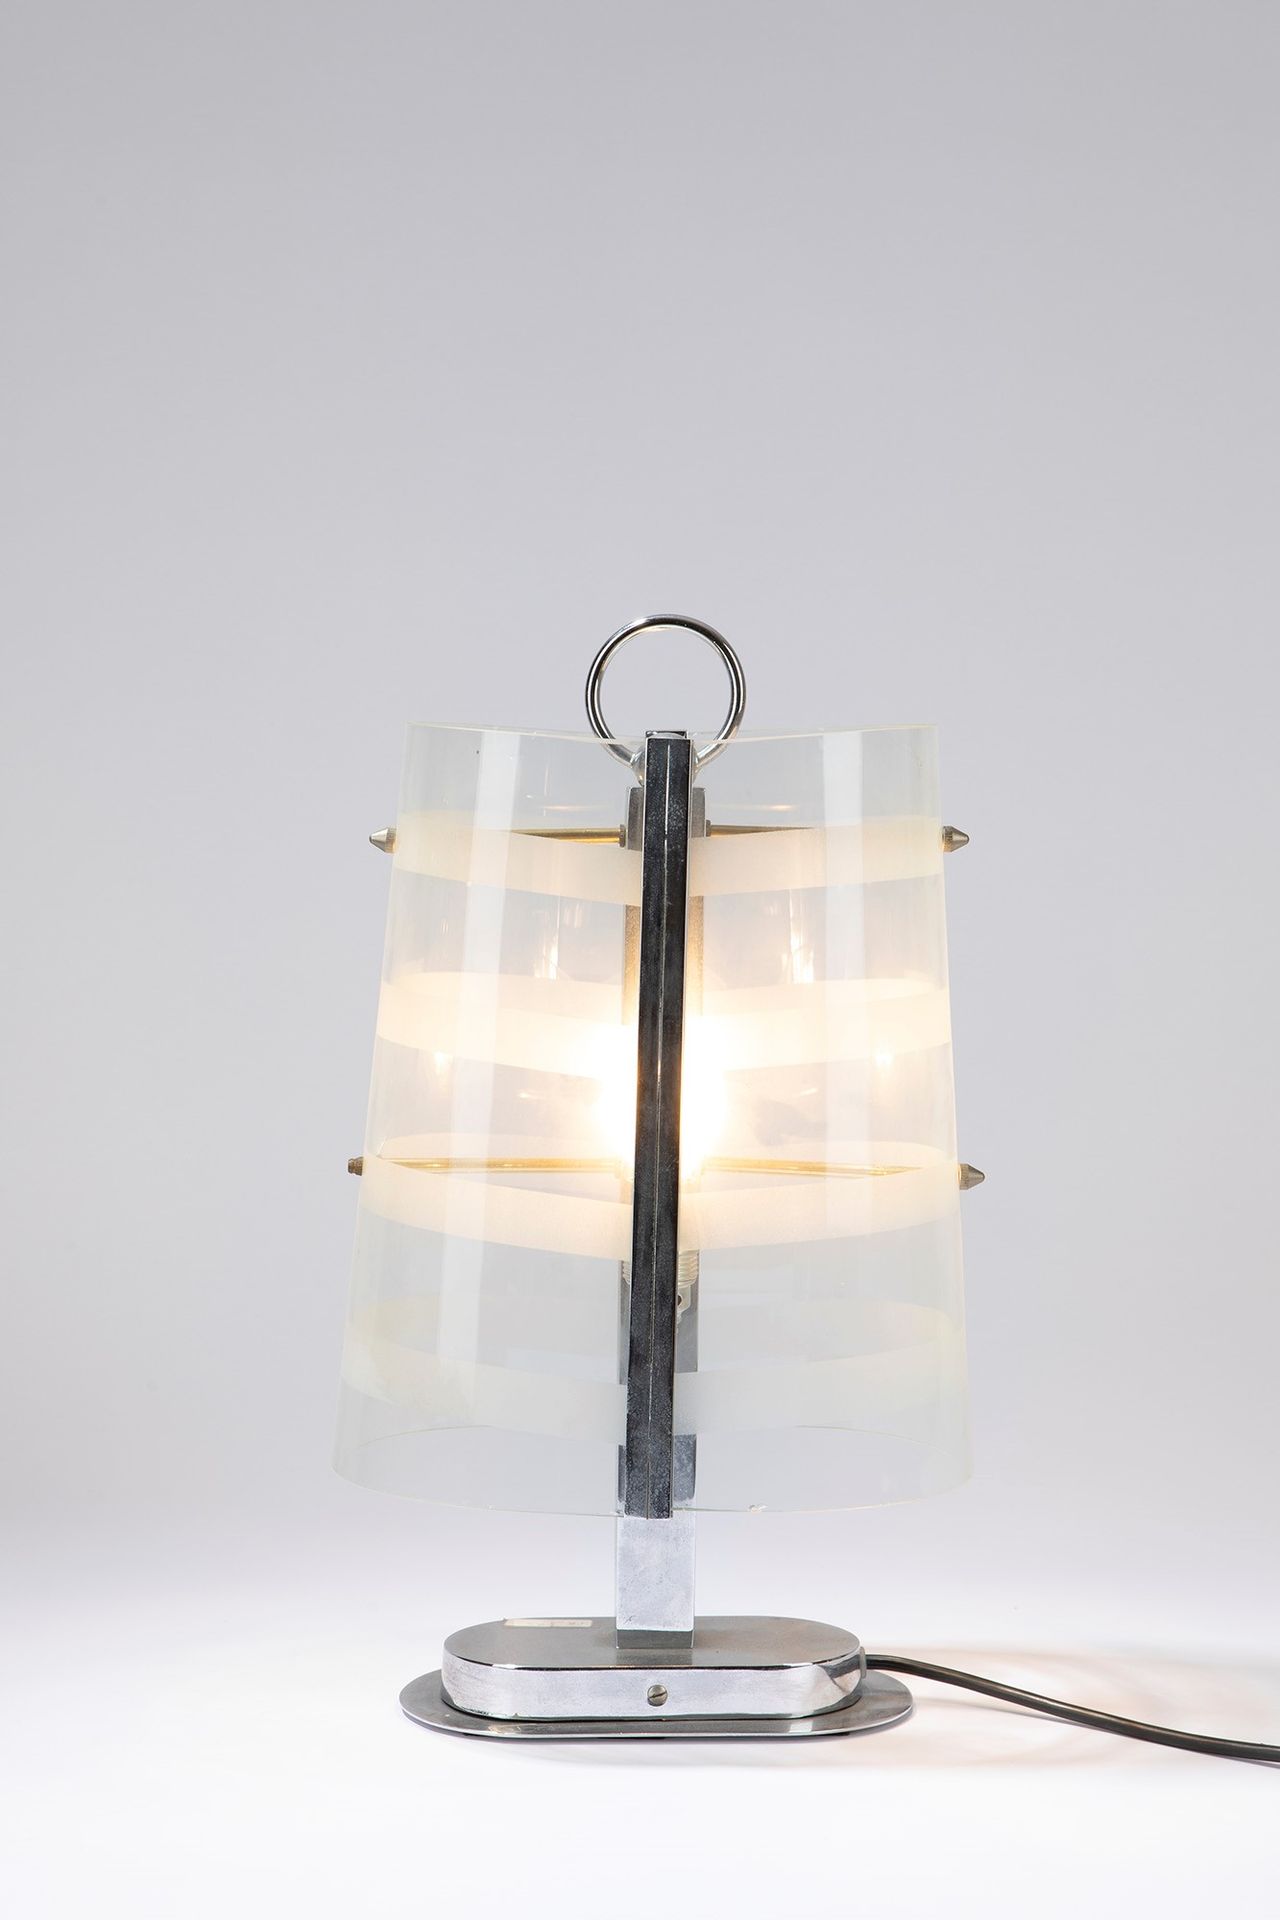 ITALIAN MANUFACTURE 台灯，30年代

21 cm x 15 cm x h. 42 cm。
镀铬金属，透明玻璃扩散器，带酸度。